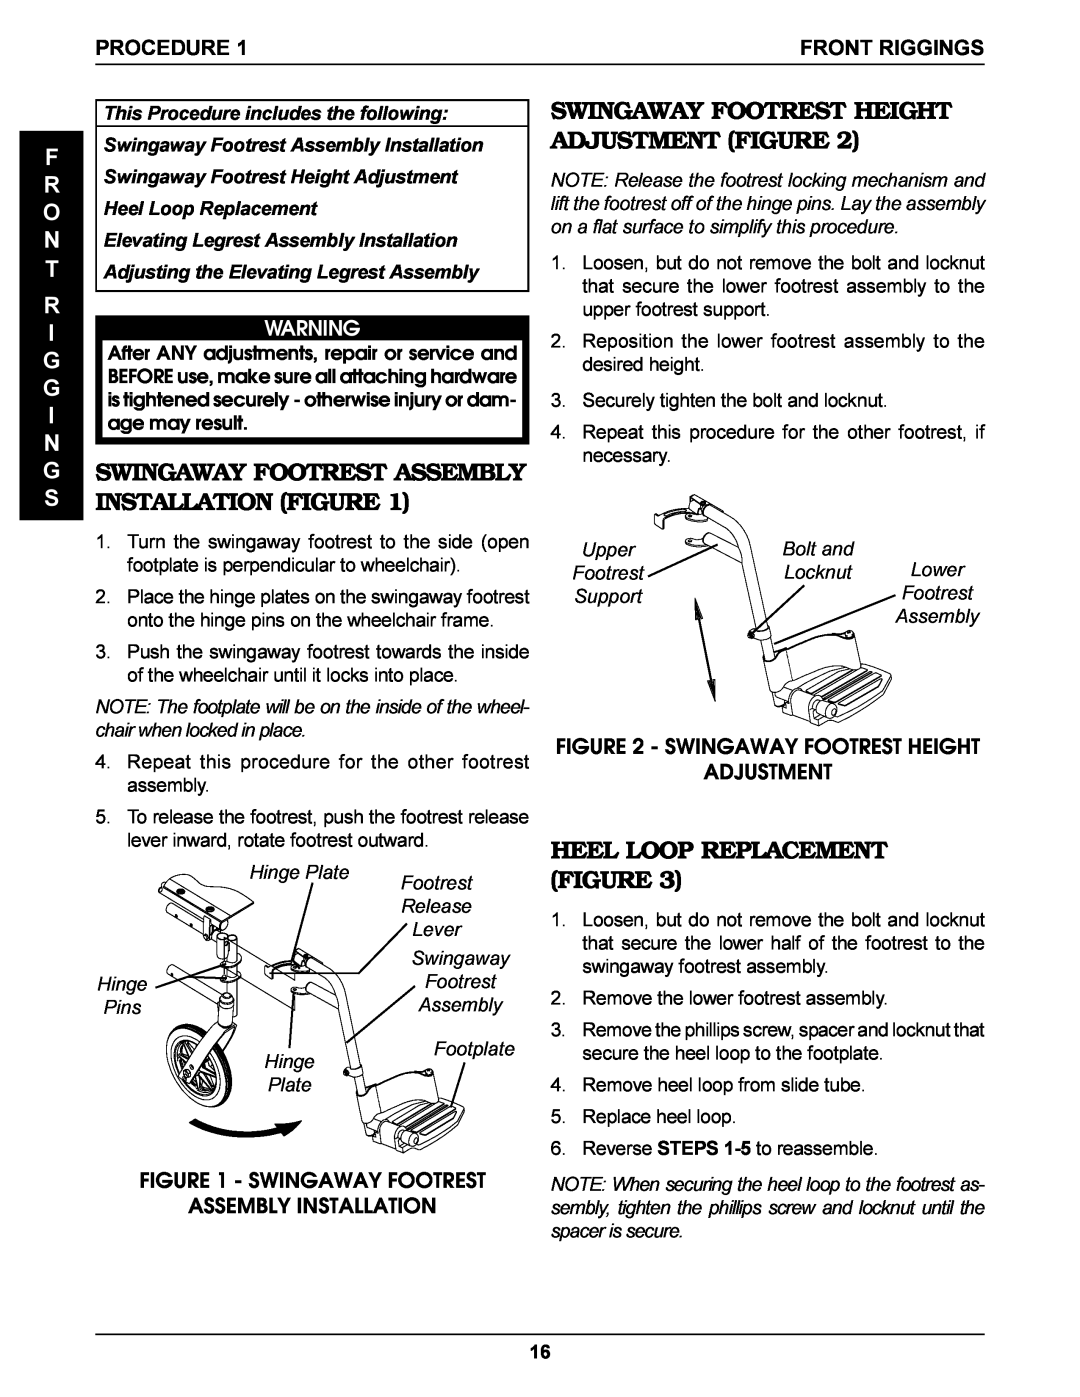 Invacare Tracer Titan, SX Heel Loop Replacement Figure, Swingaway Footrest Assembly Installation Figure, Procedure, Lever 